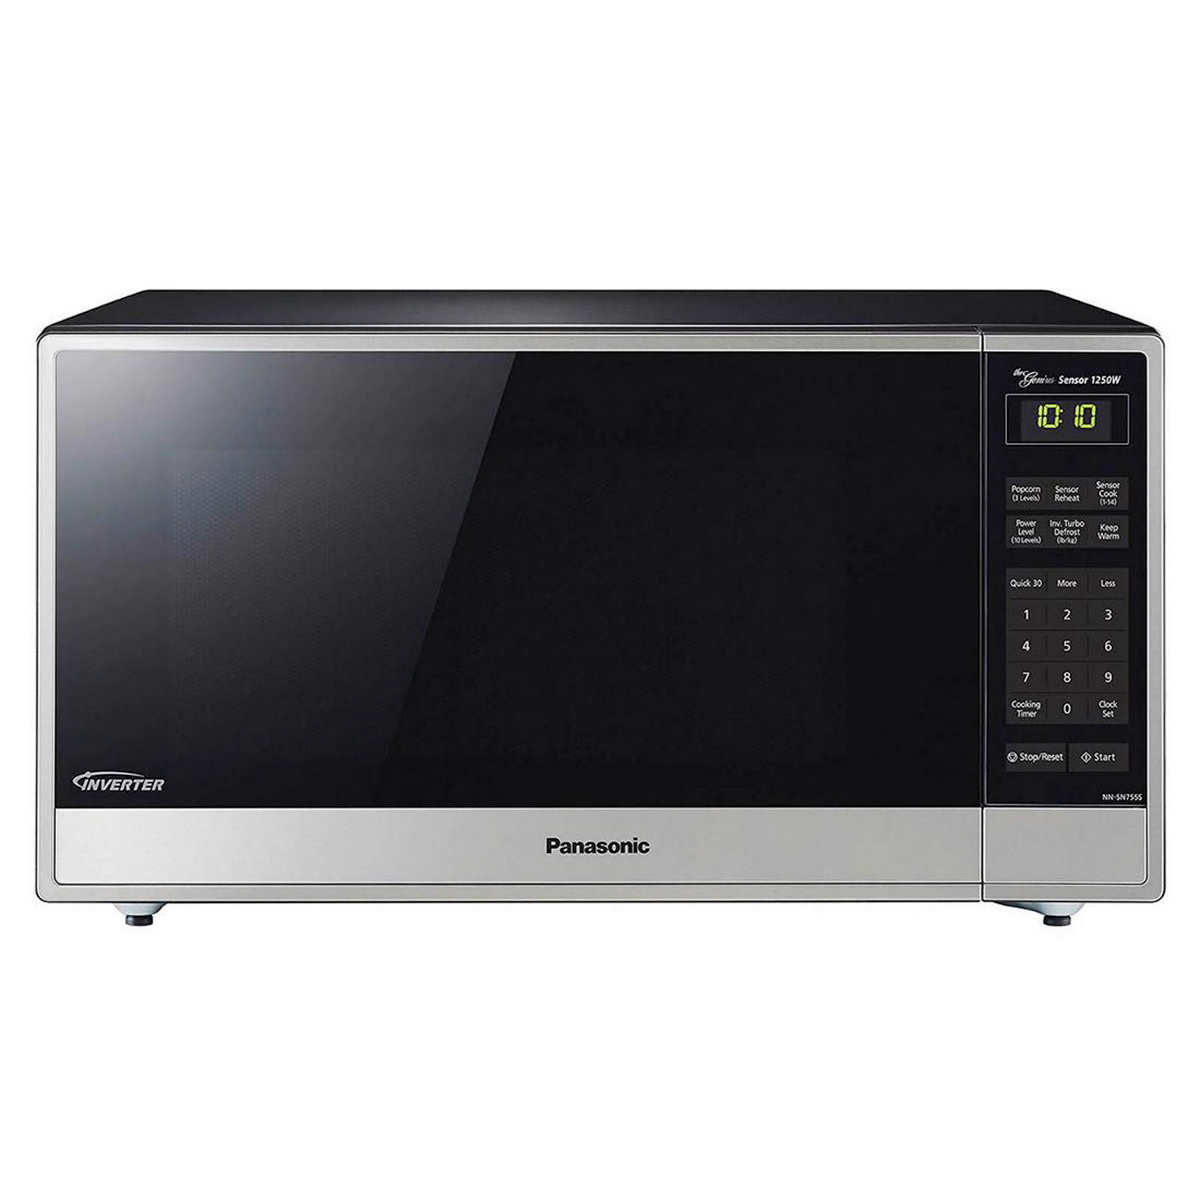 Panasonic 1 6cuft Countertop Microwave With Genius Inverter Technology Nn Sn755s Costco